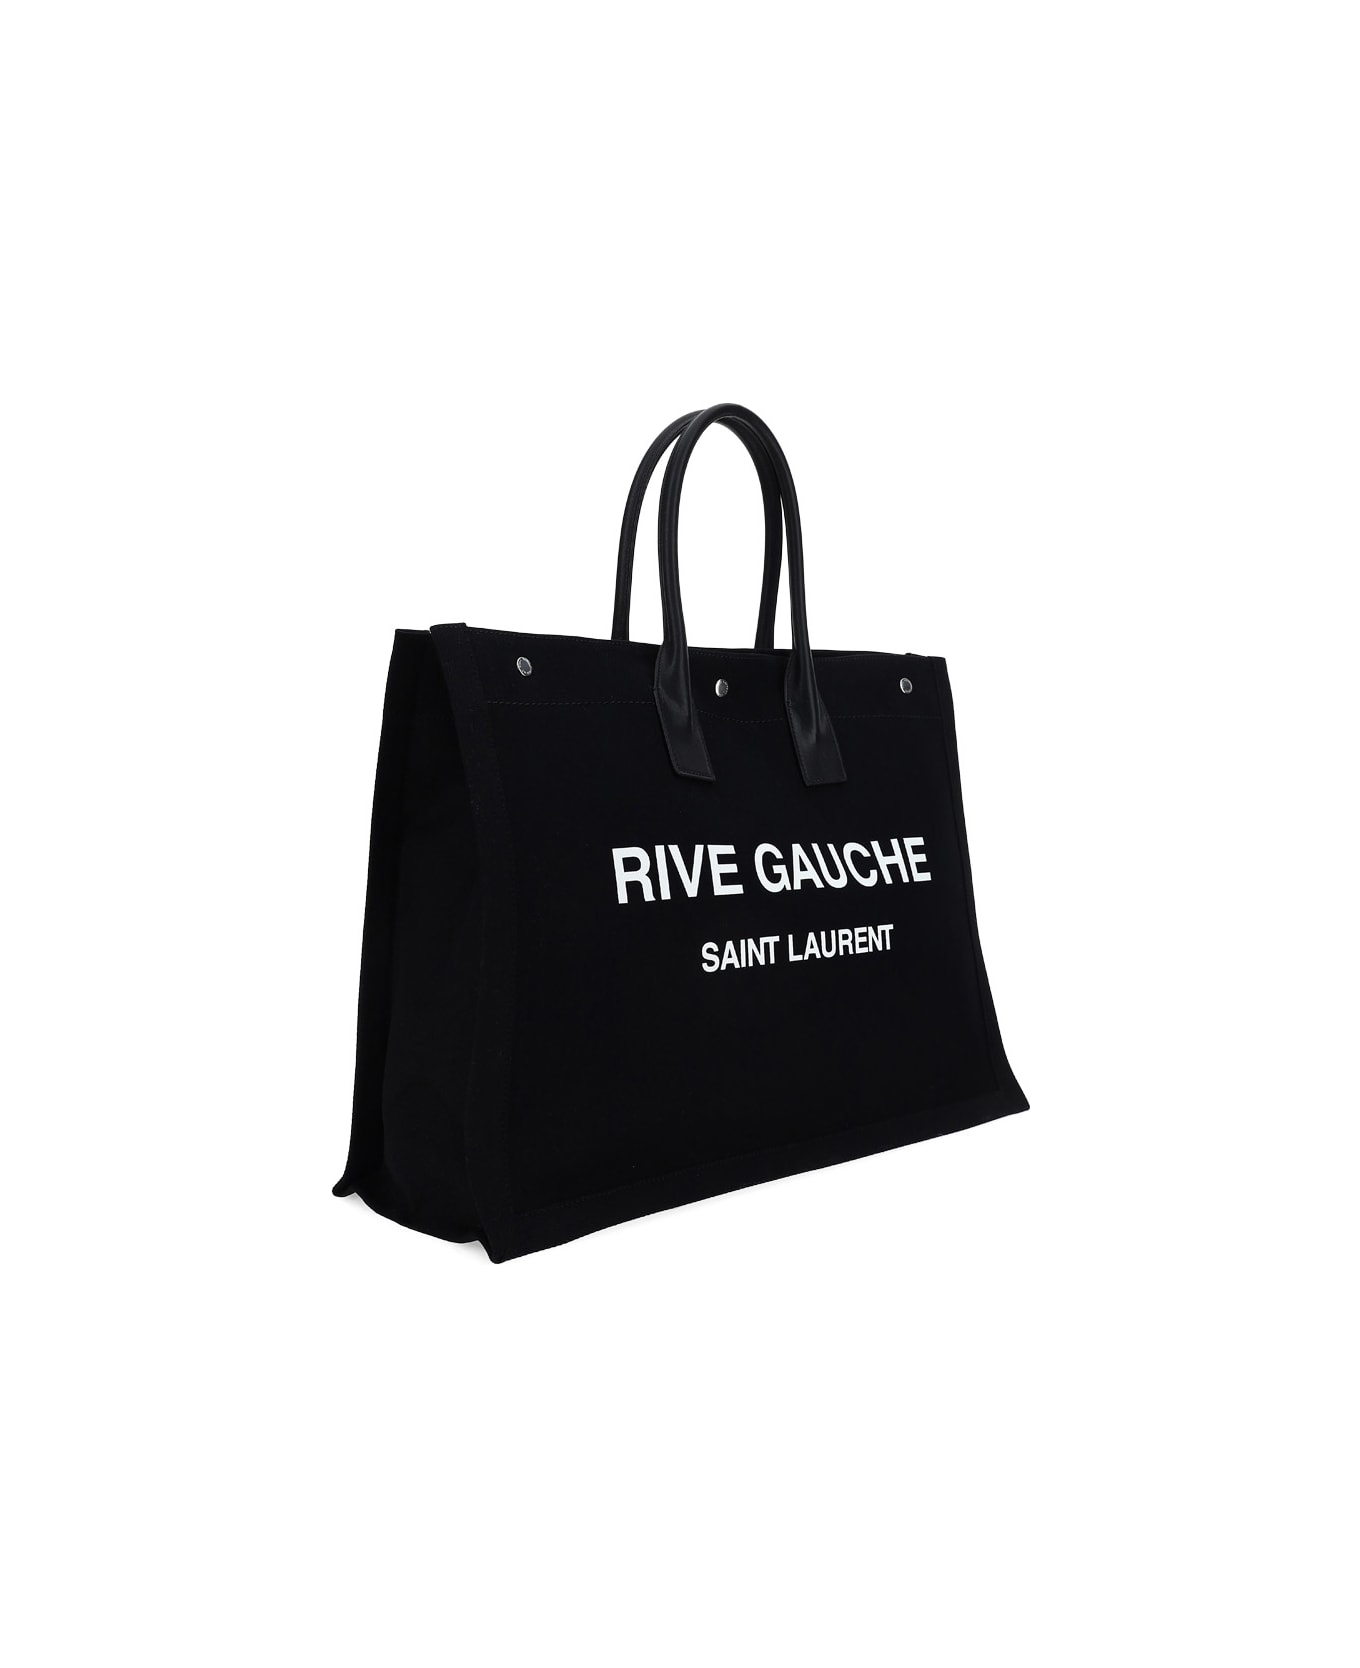 Saint Laurent Rive Gauche Tote Bag - Nero/bianco/nero/n トートバッグ